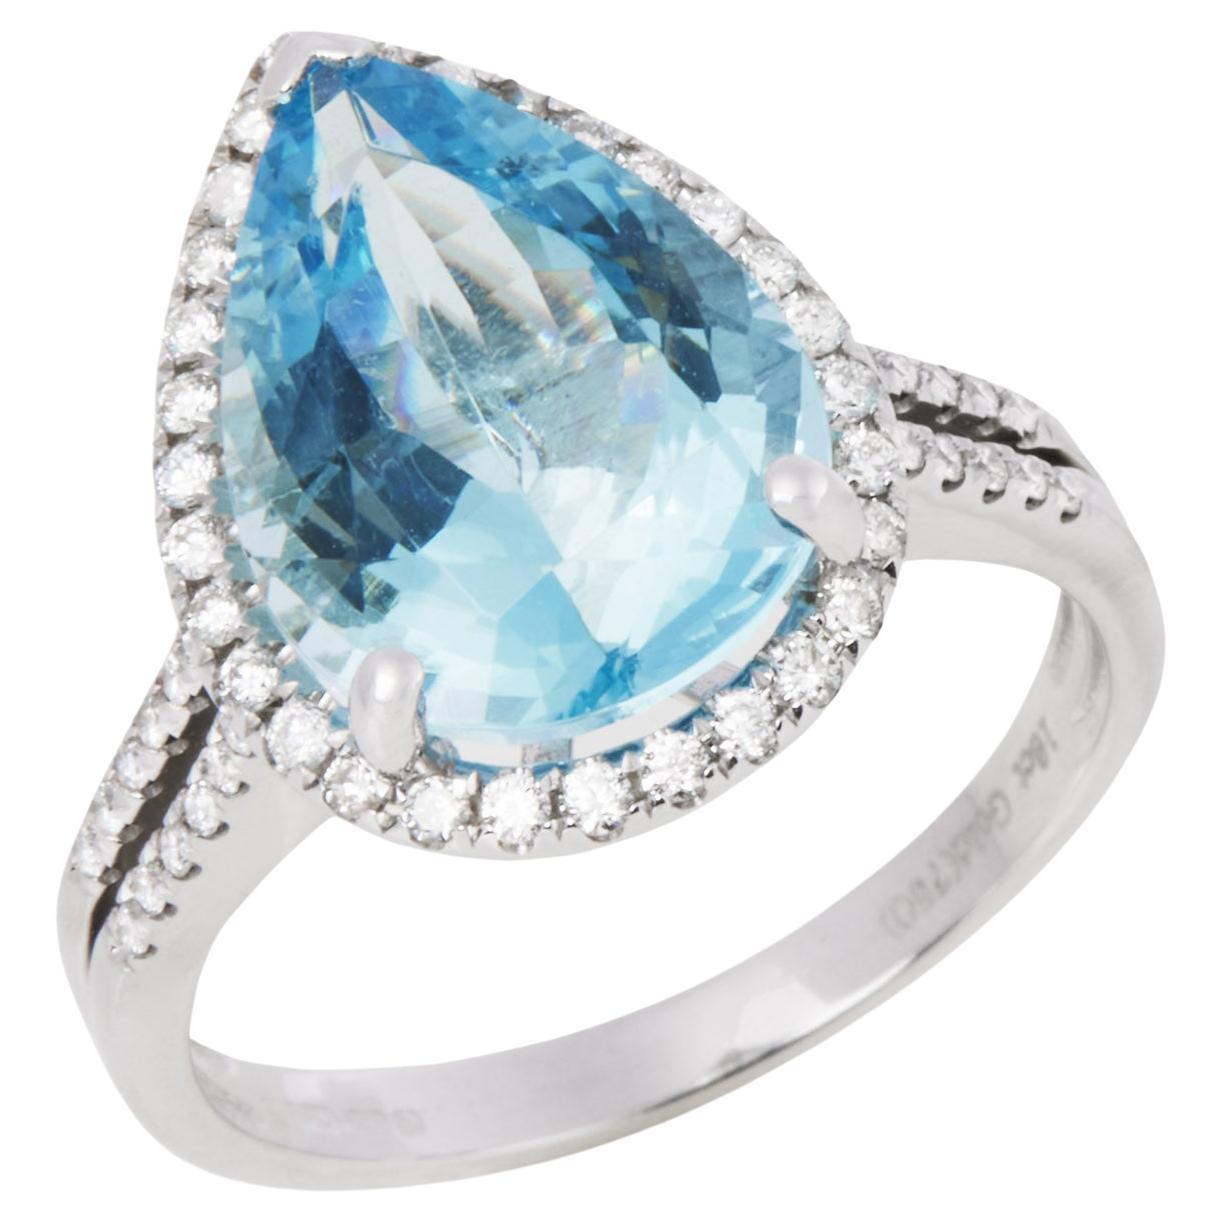 David Jerome Certified 4.77ct Pear Cut Aquamarine and Diamond Ring